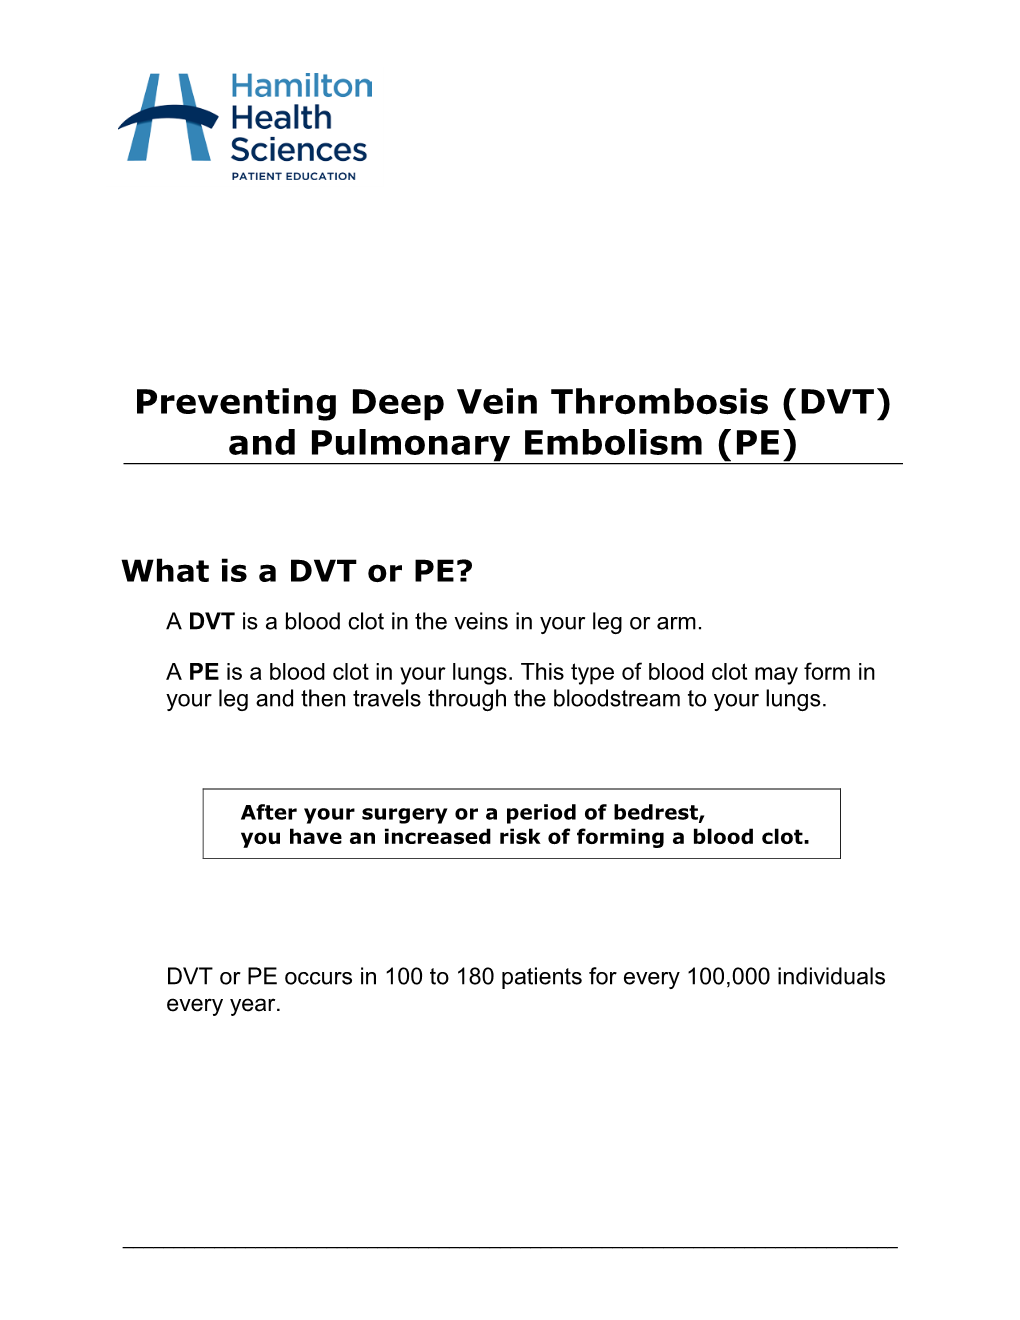 Preventing Deep Vein Thrombosis (DVT) and Pulmonary Embolism (PE)